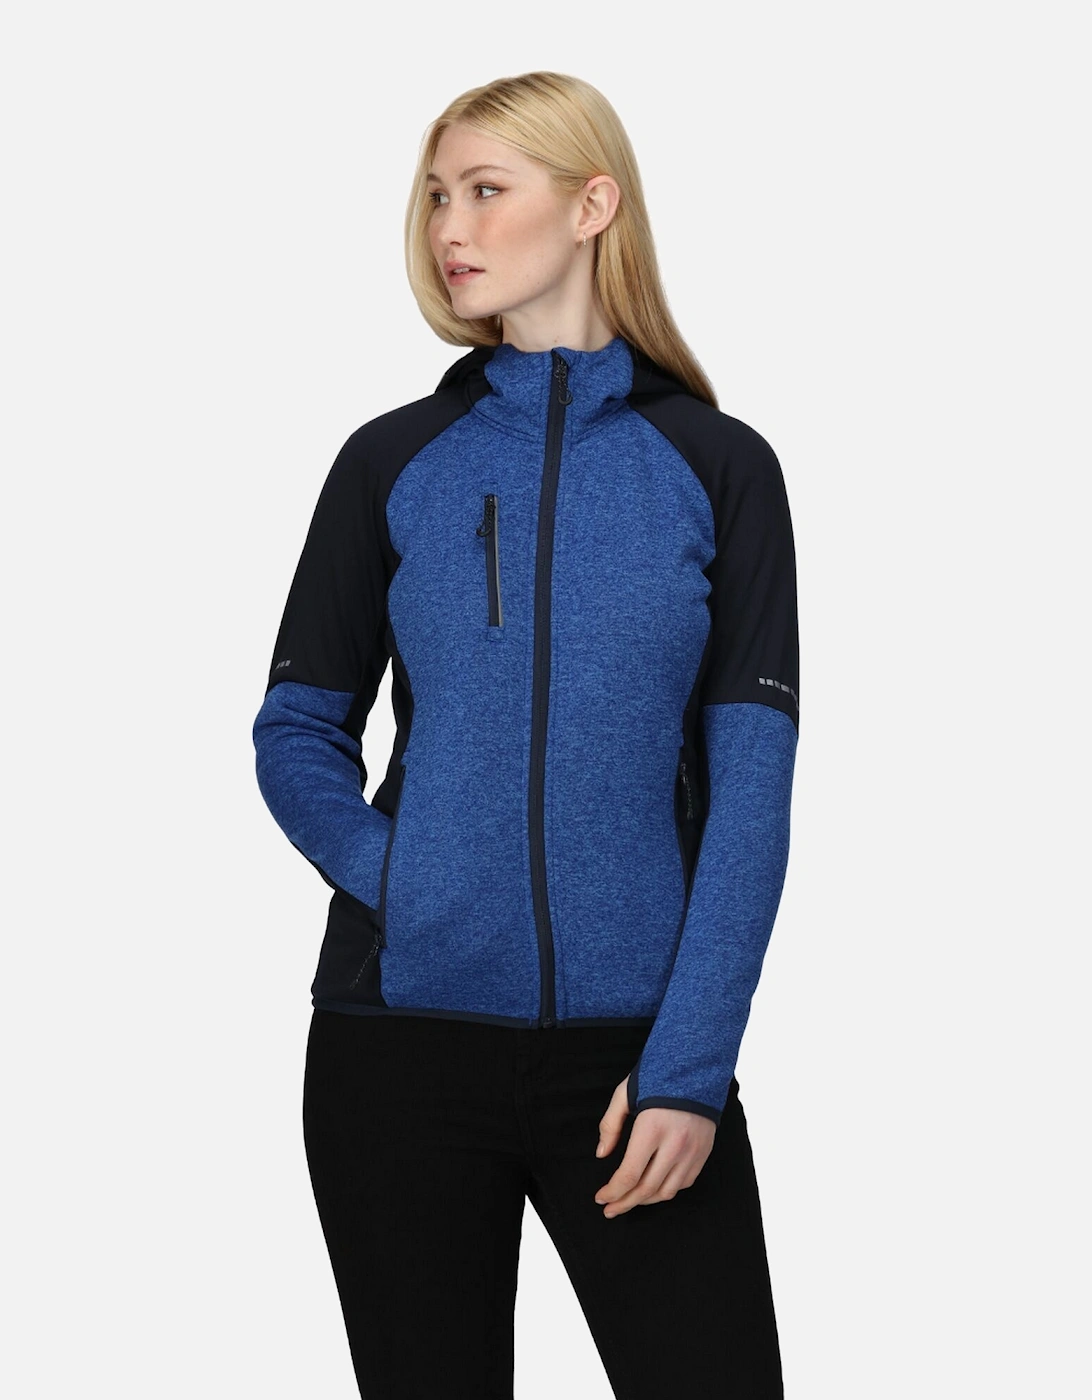 Womens/Ladies Professional Coldspring Fleece Jacket